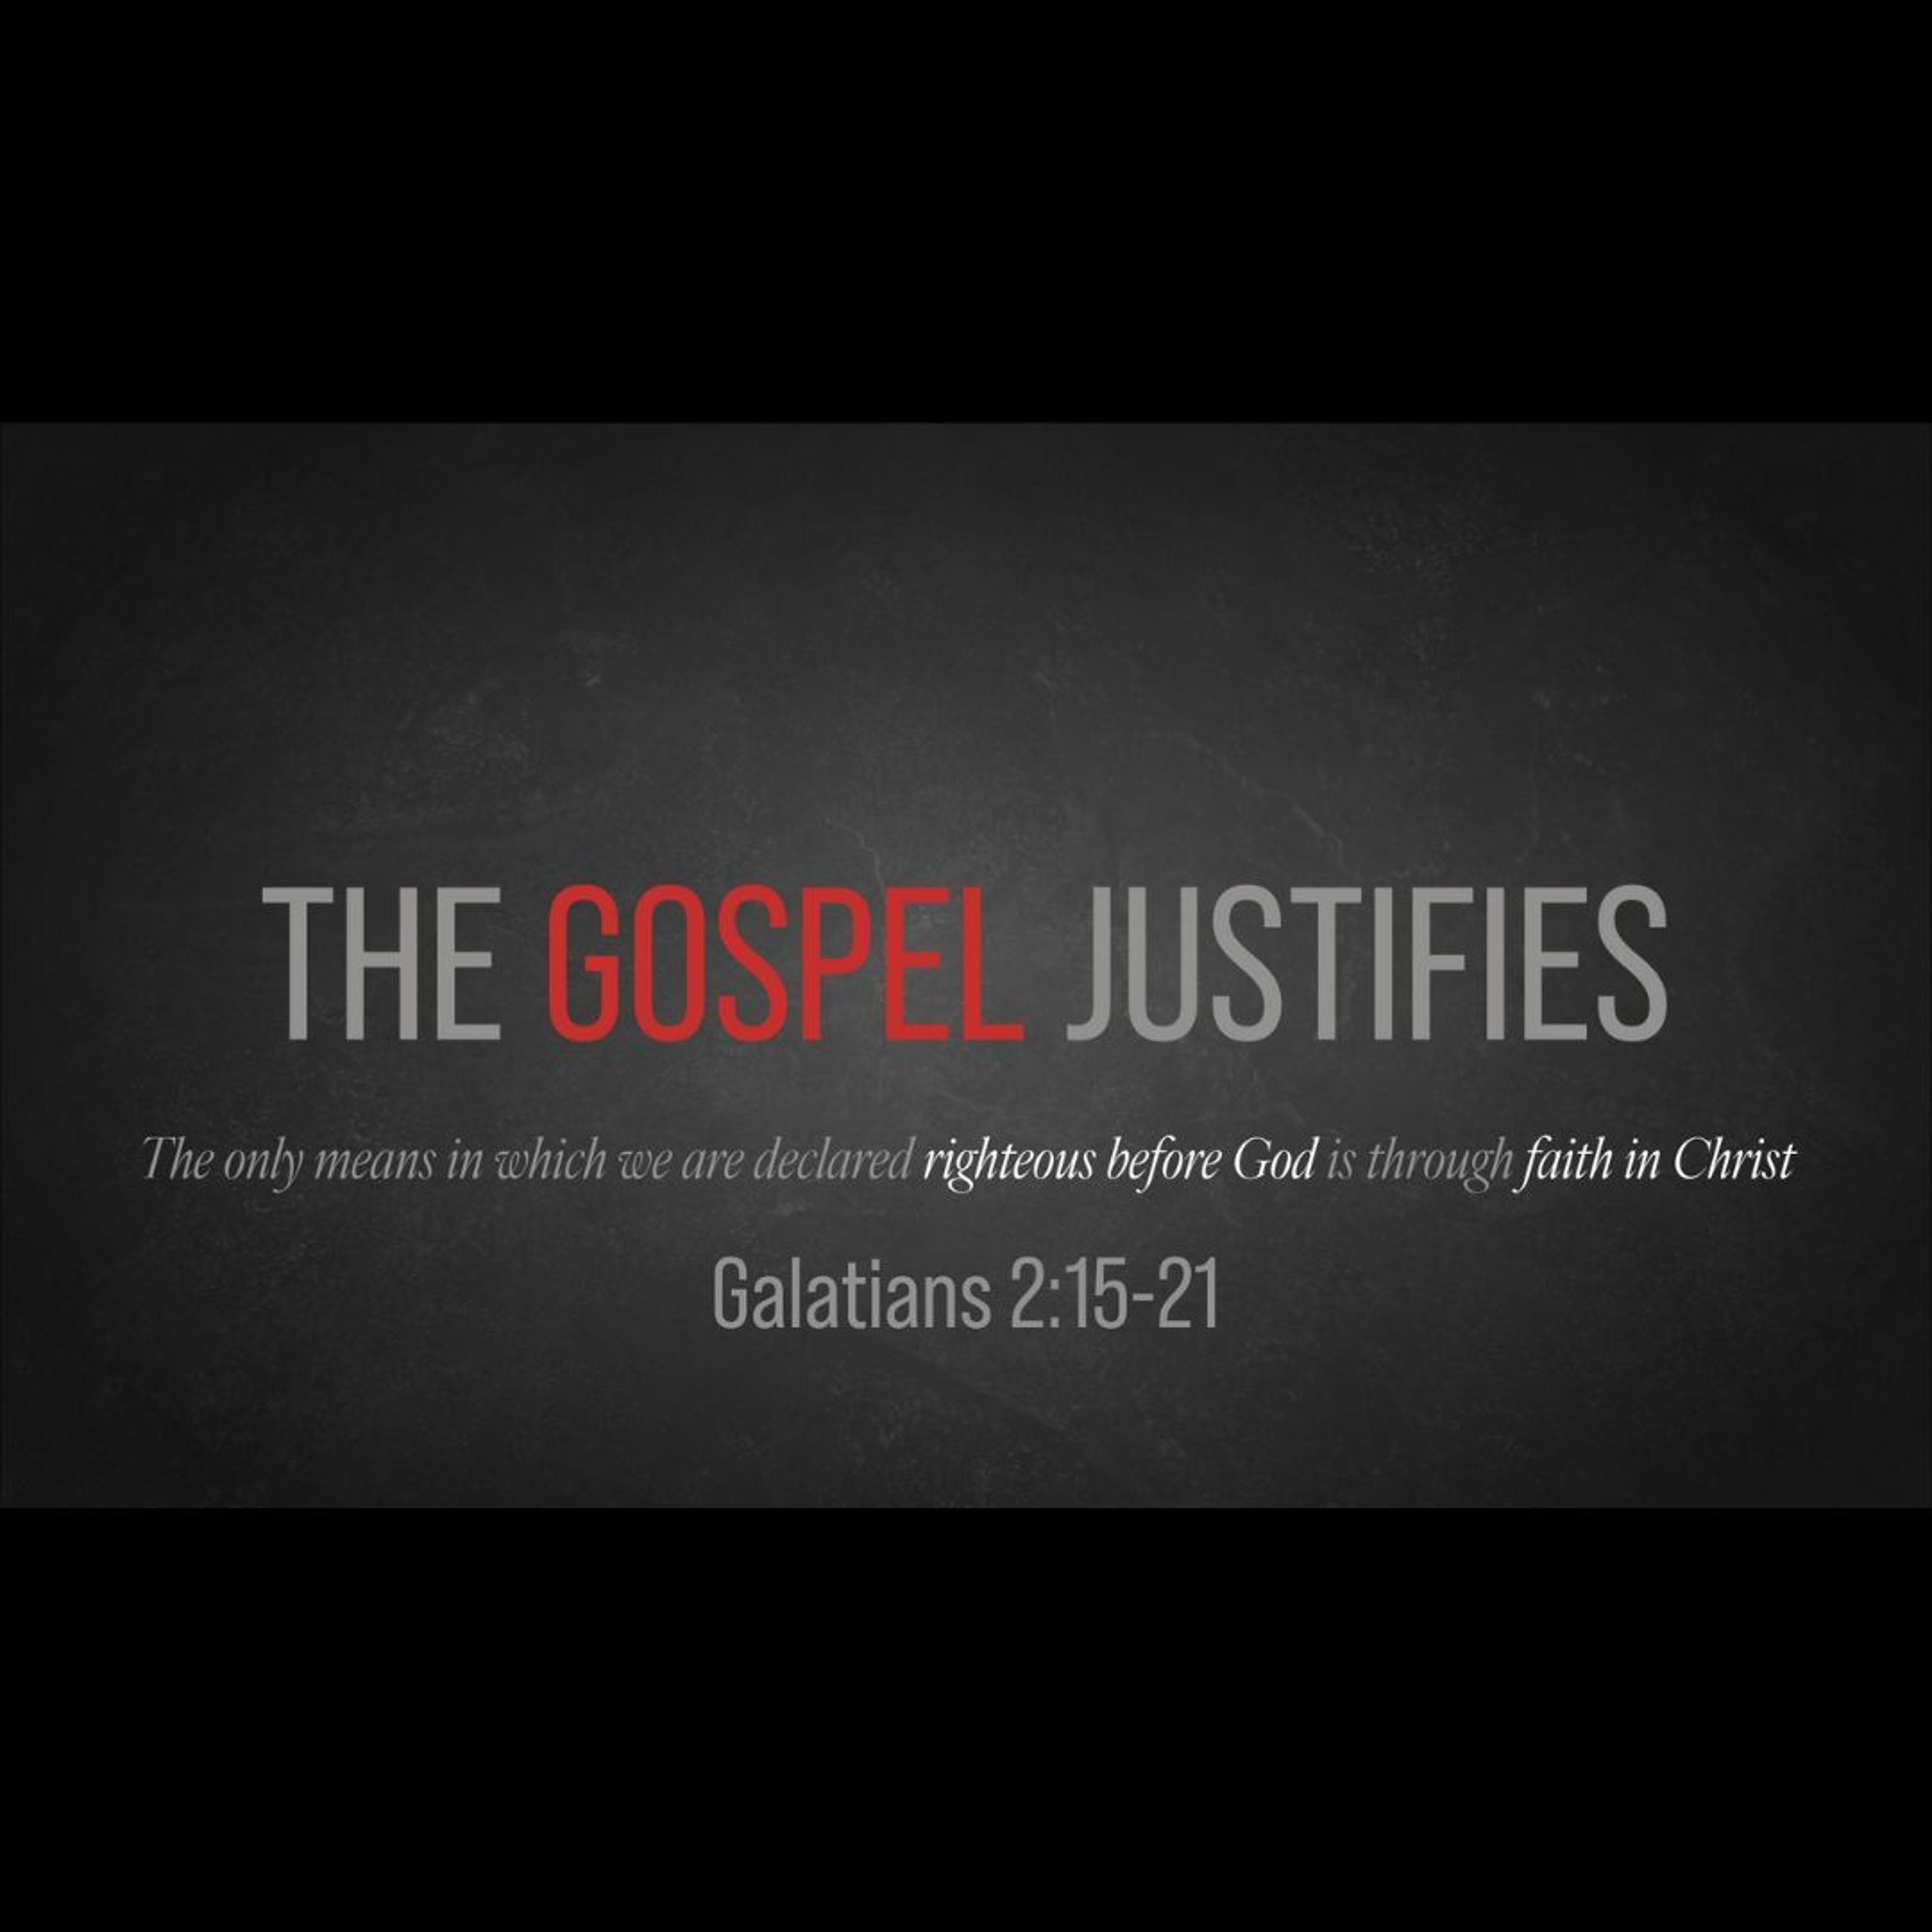 The Gospel Justifies (Galatians 2:15-21)